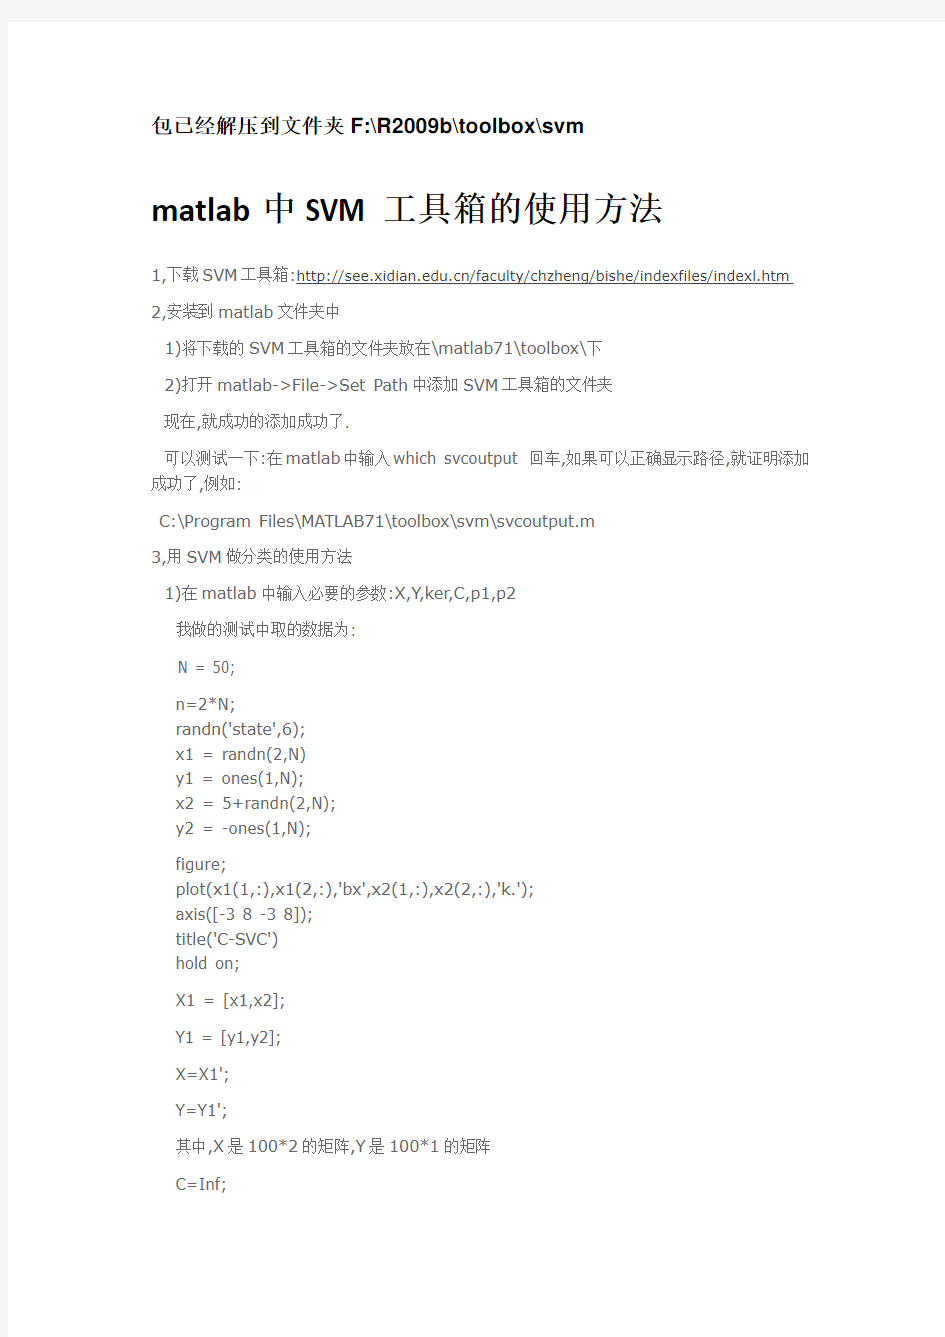 (1)matlab中SVM工具箱的使用方法